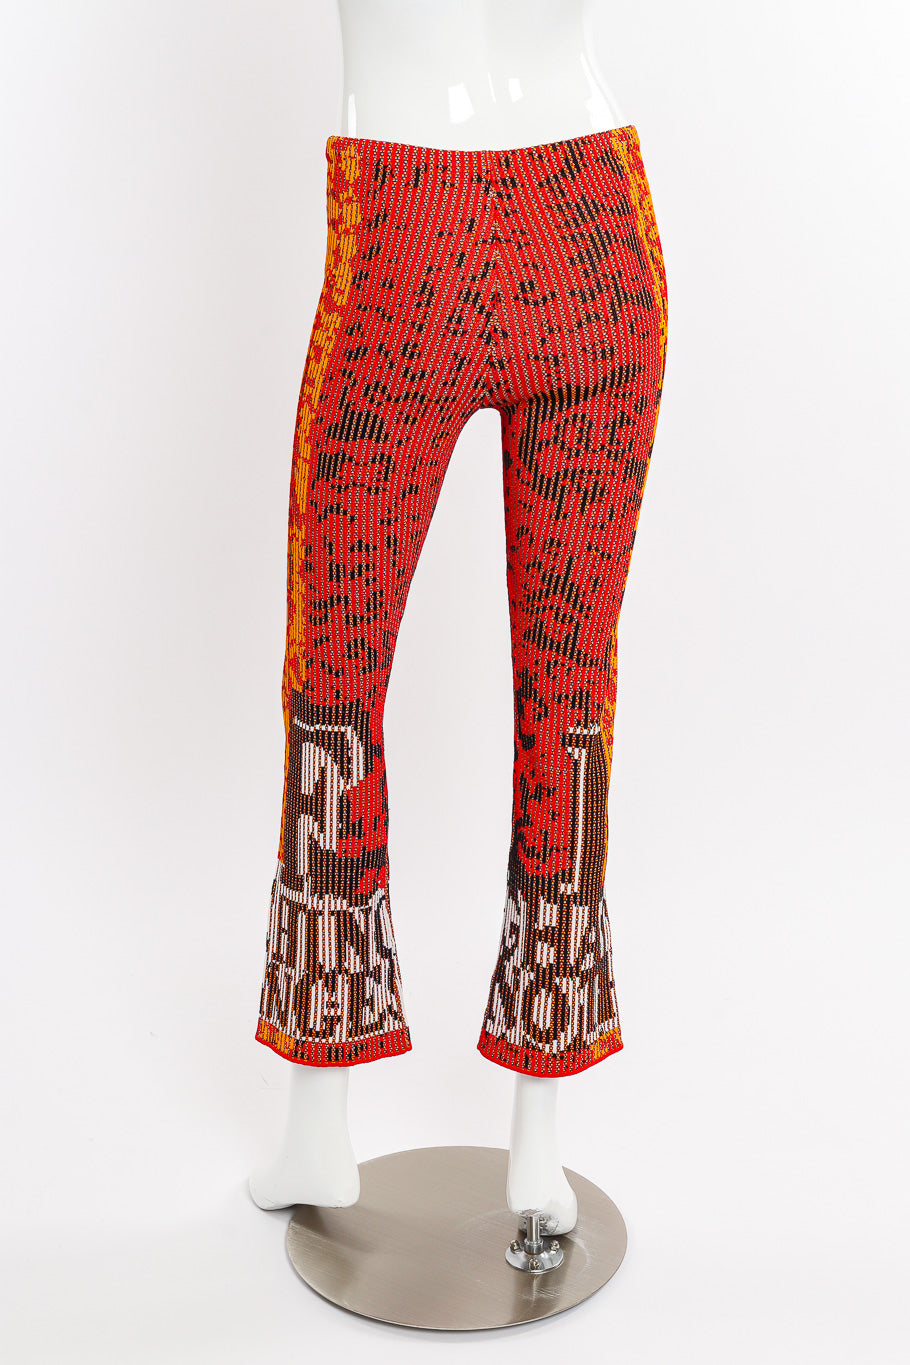 Rudi Gernreich 2018 F/W Graphic Knit Pant back view on mannequin @Recessla